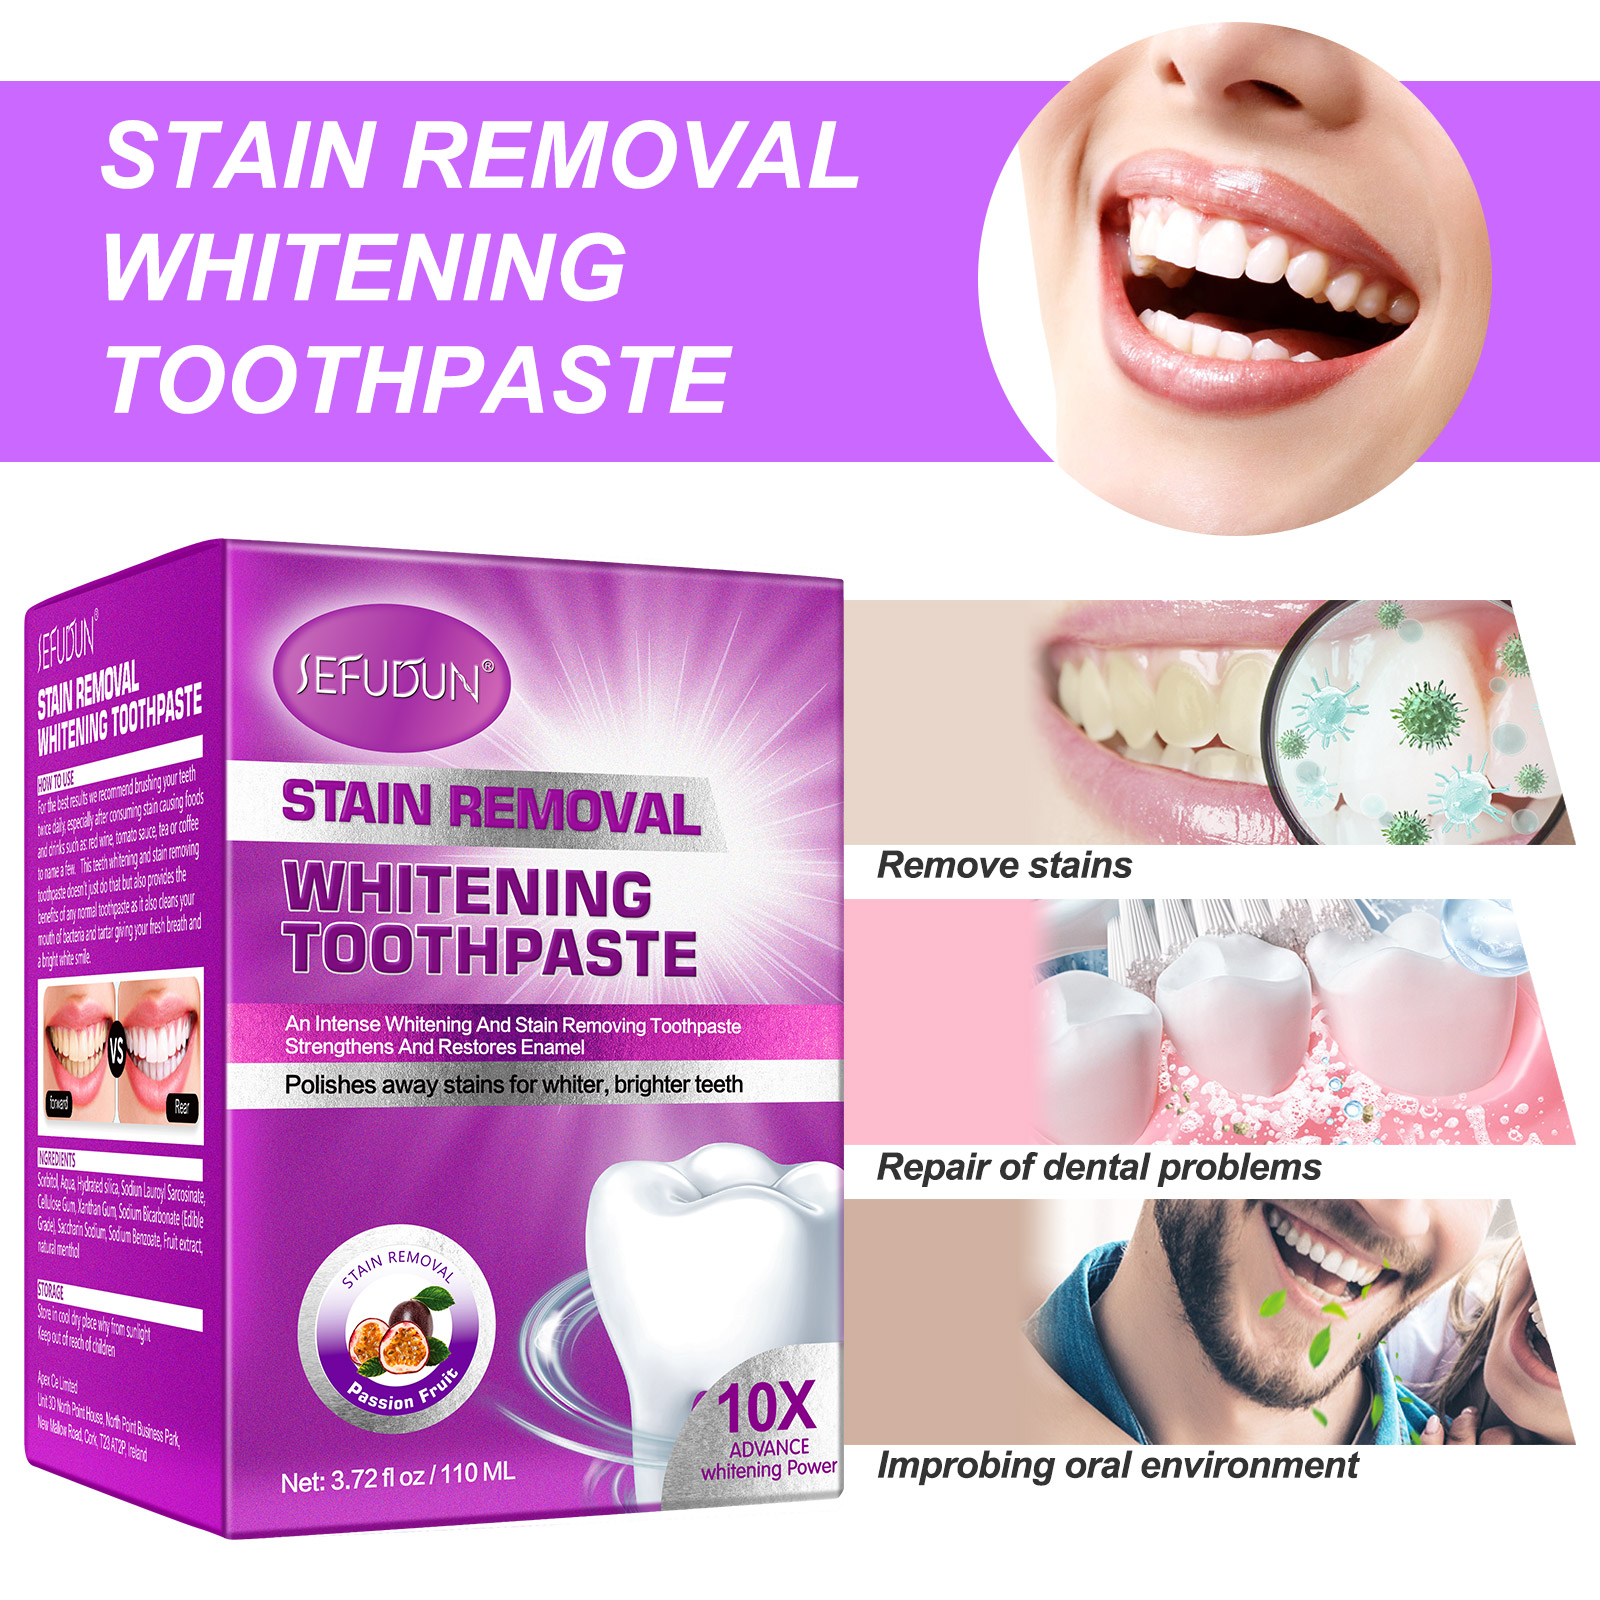 Sefudun Whitening ToothPaste Teeth Hygiene Stain Removal Color Corrector Sensitive Gums Strengthens Restore Enamel Brightening